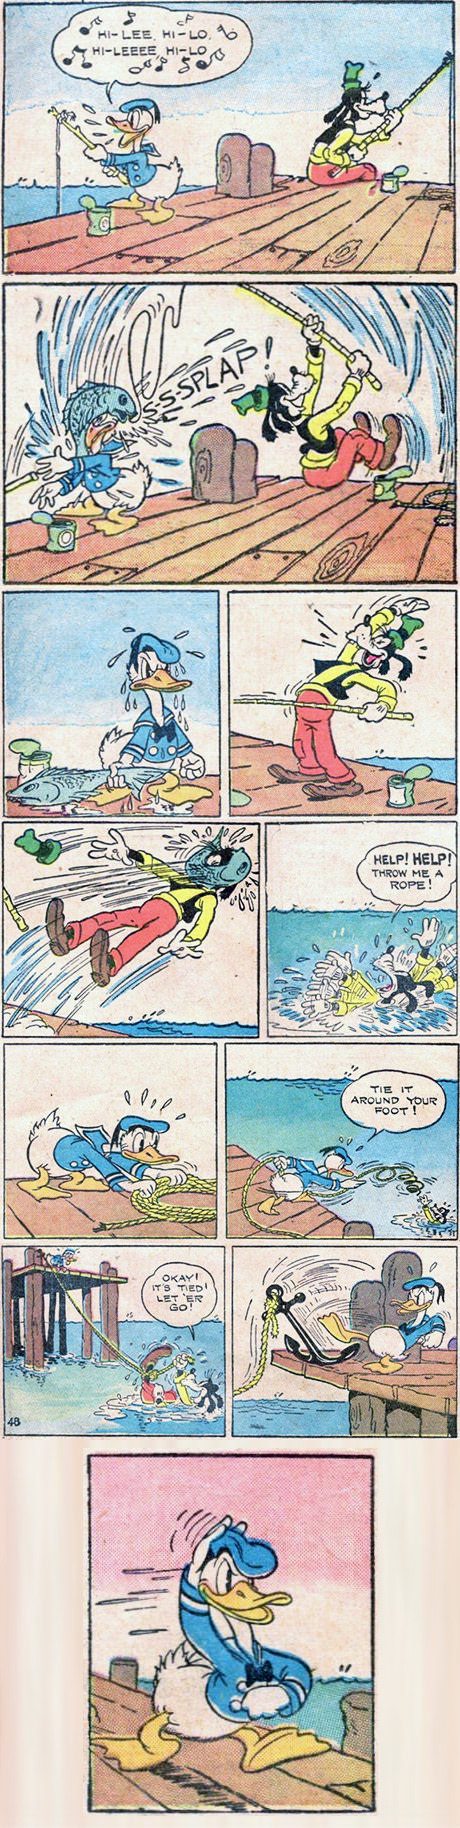 Don't mess with Donald - Donald Duck, Goofy, , 9GAG, Longpost, Comics, Walt disney company